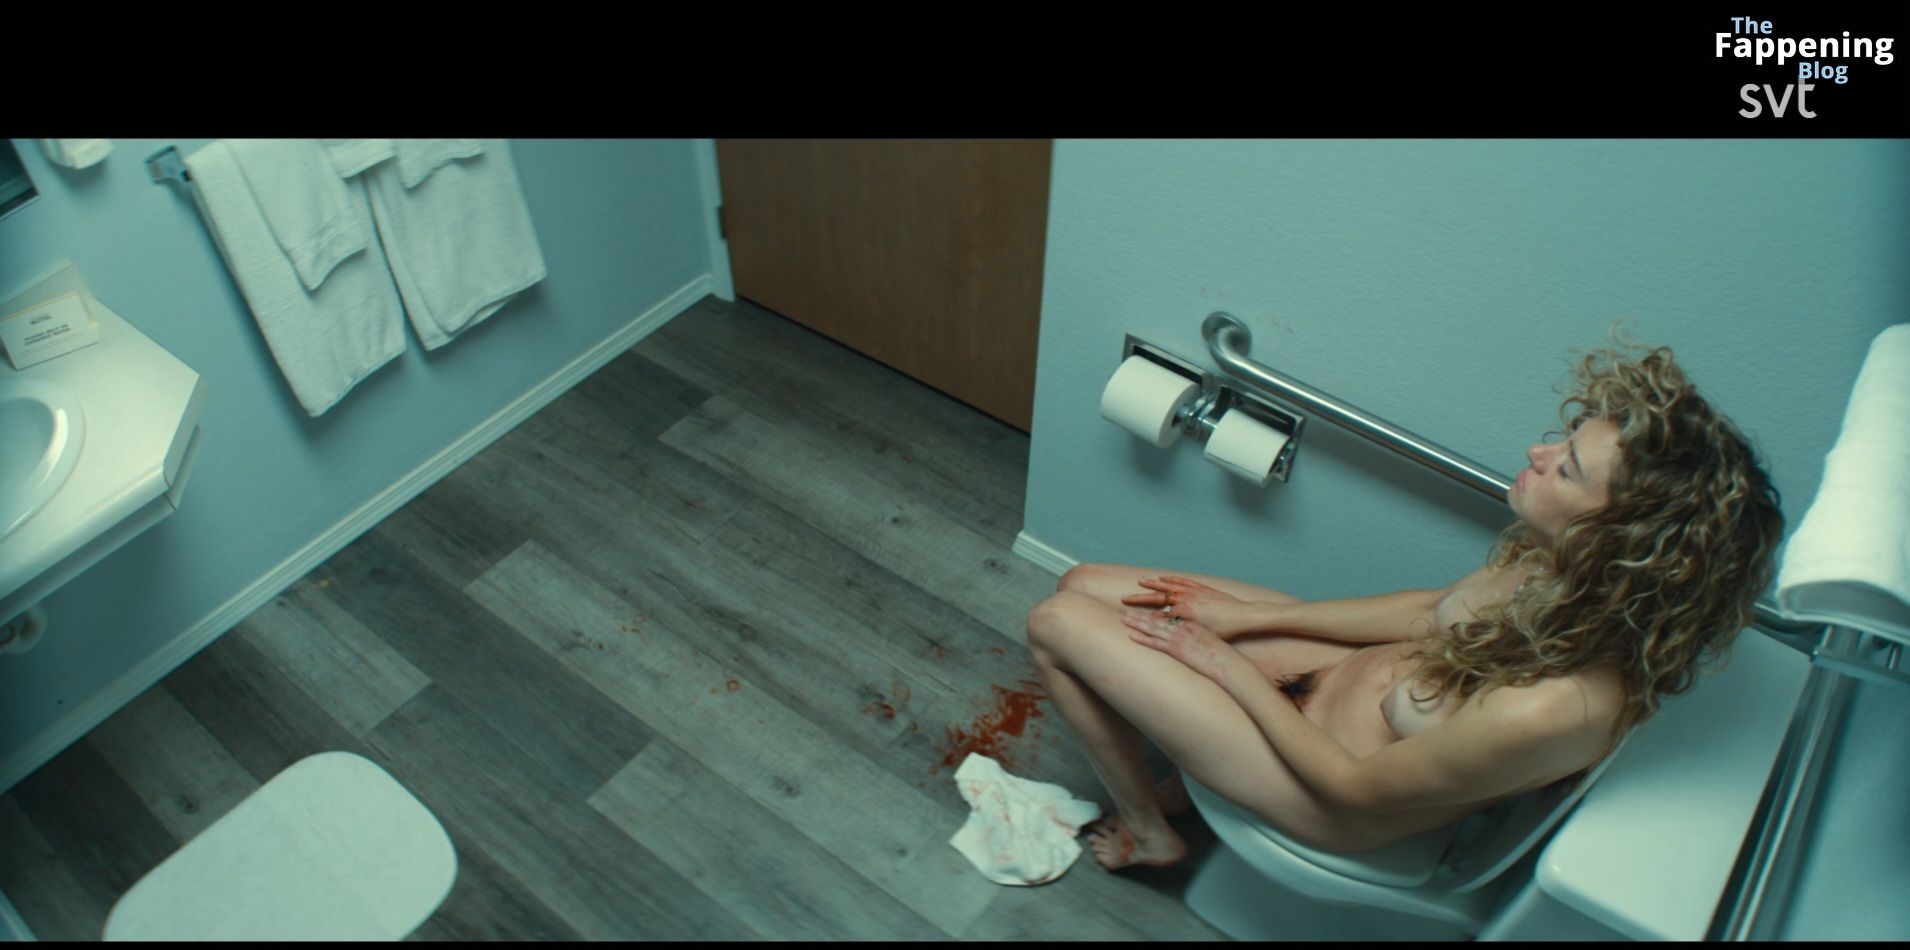 Shailene-Woodley-Nude-15-The-Fappening-Blog.jpg